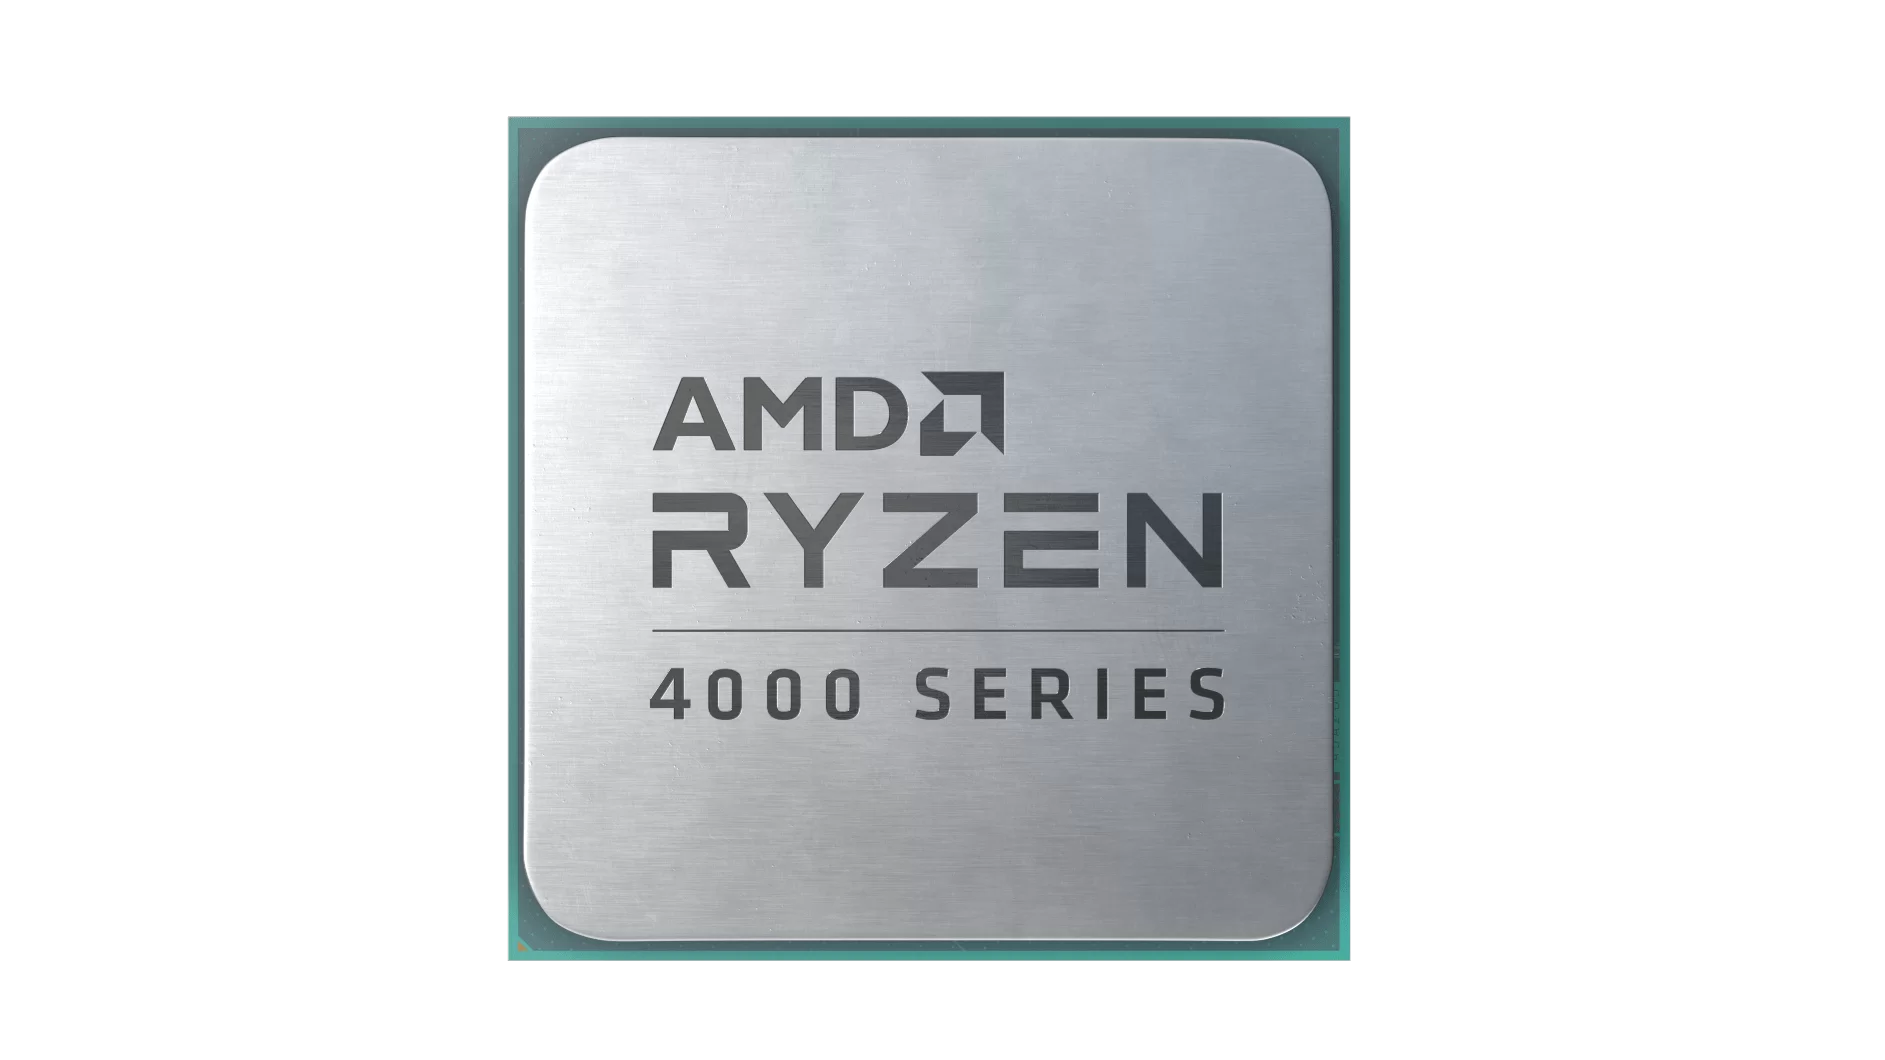 494918 RenoirAM4 4000series 01 0002 alpha | AMD | AMD แนะนำโปรเซสเซอร์ AMD Ryzen 4000 Series มาพร้อมกราฟิกการ์ด AMD Radeon เพื่อส่งมอบประสิทธิภาพที่ก้าวล้ำให้กับการใช้งานเชิงพาณิชย์และผู้ใช้คอมพิวเตอร์ทั่วไป